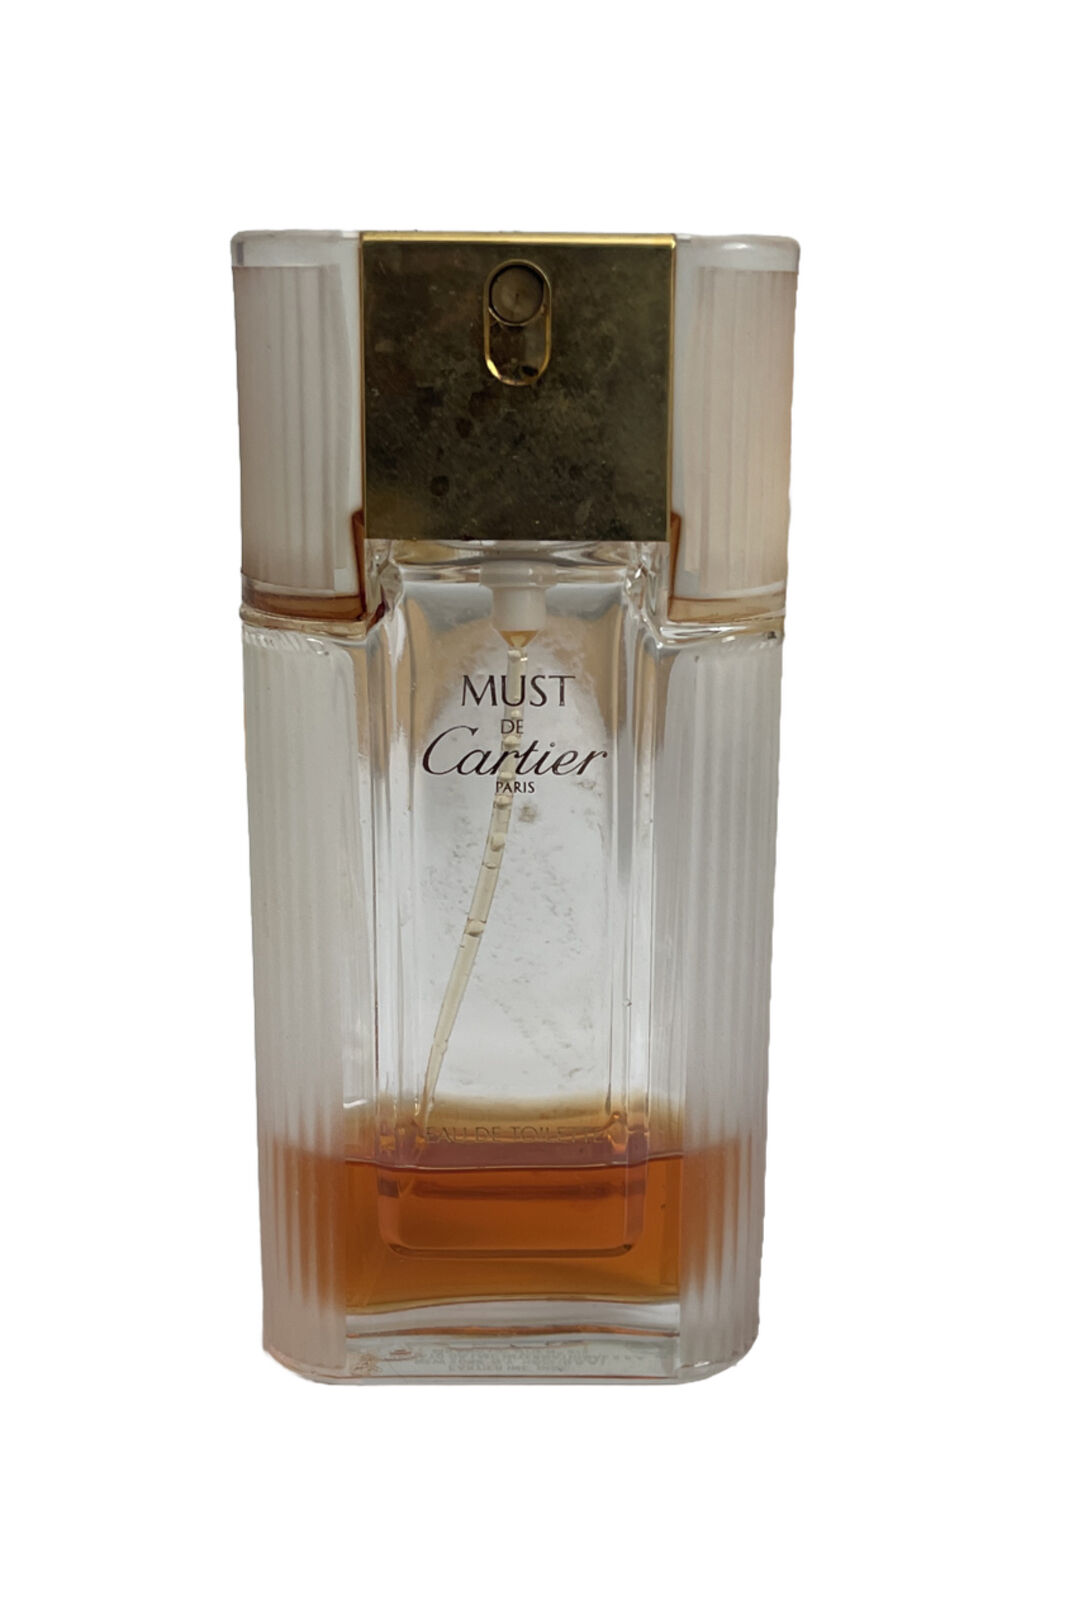 Must de Cartier Paris EDT Spray 1.6oz 50ml Vintage 10% Full